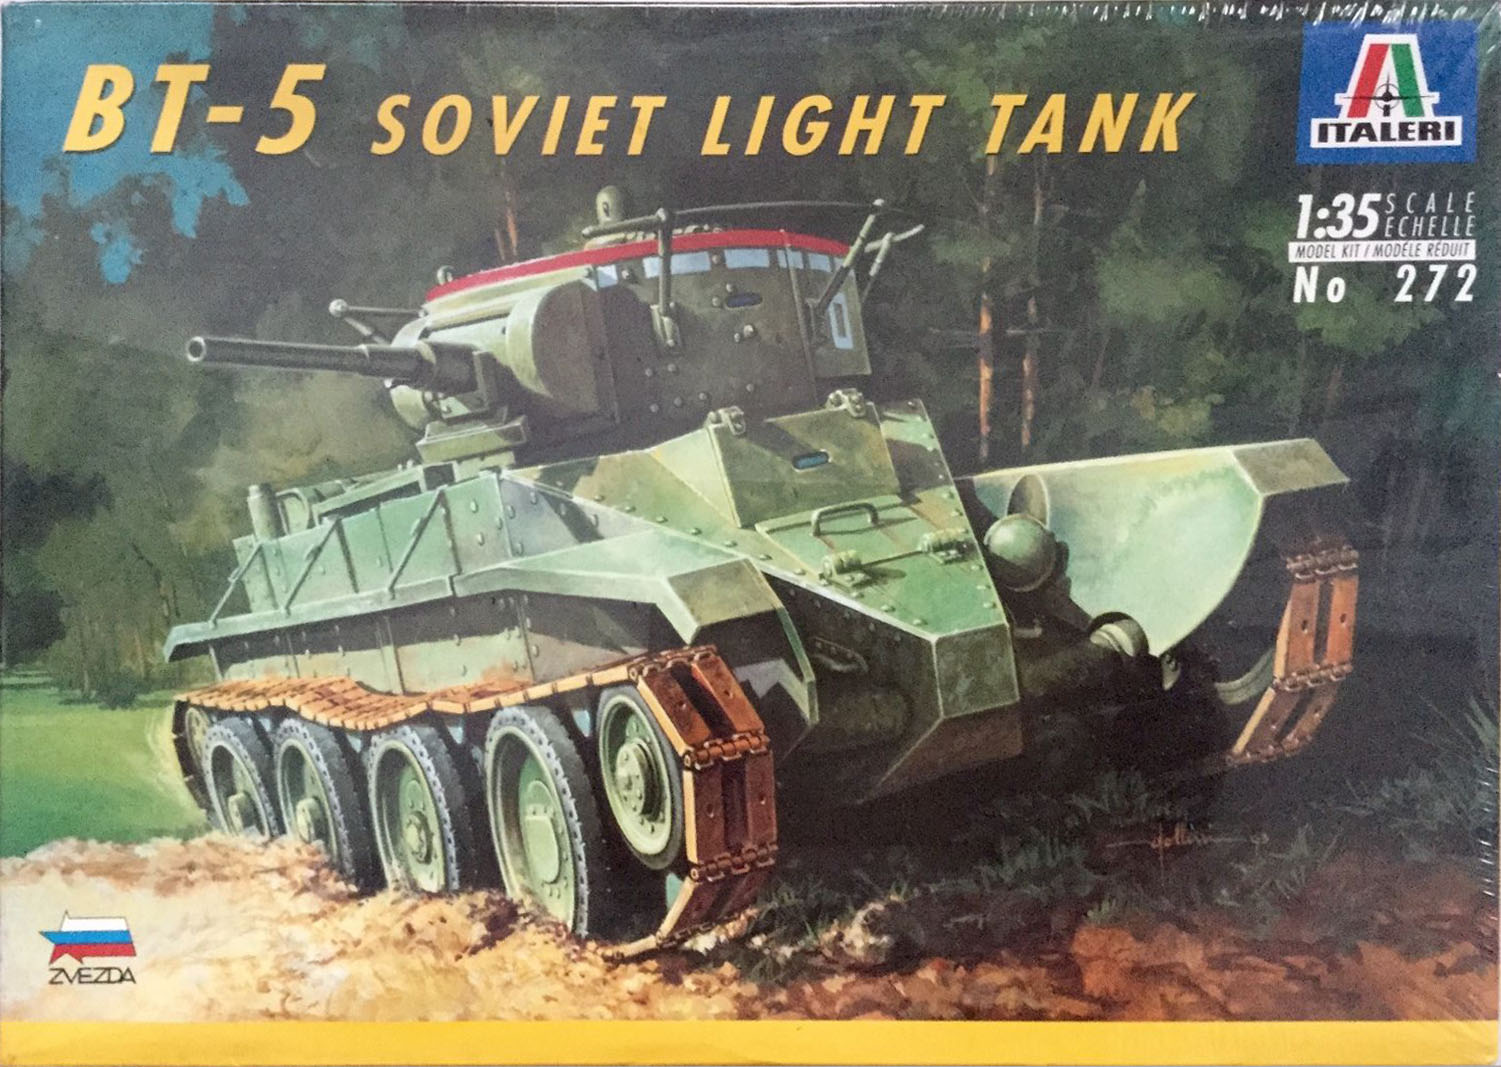 iTALERI WW-2 RUSSIAN BT-5 SOVIET LIGHT TANK PLASTIC MODEL KIT # 272